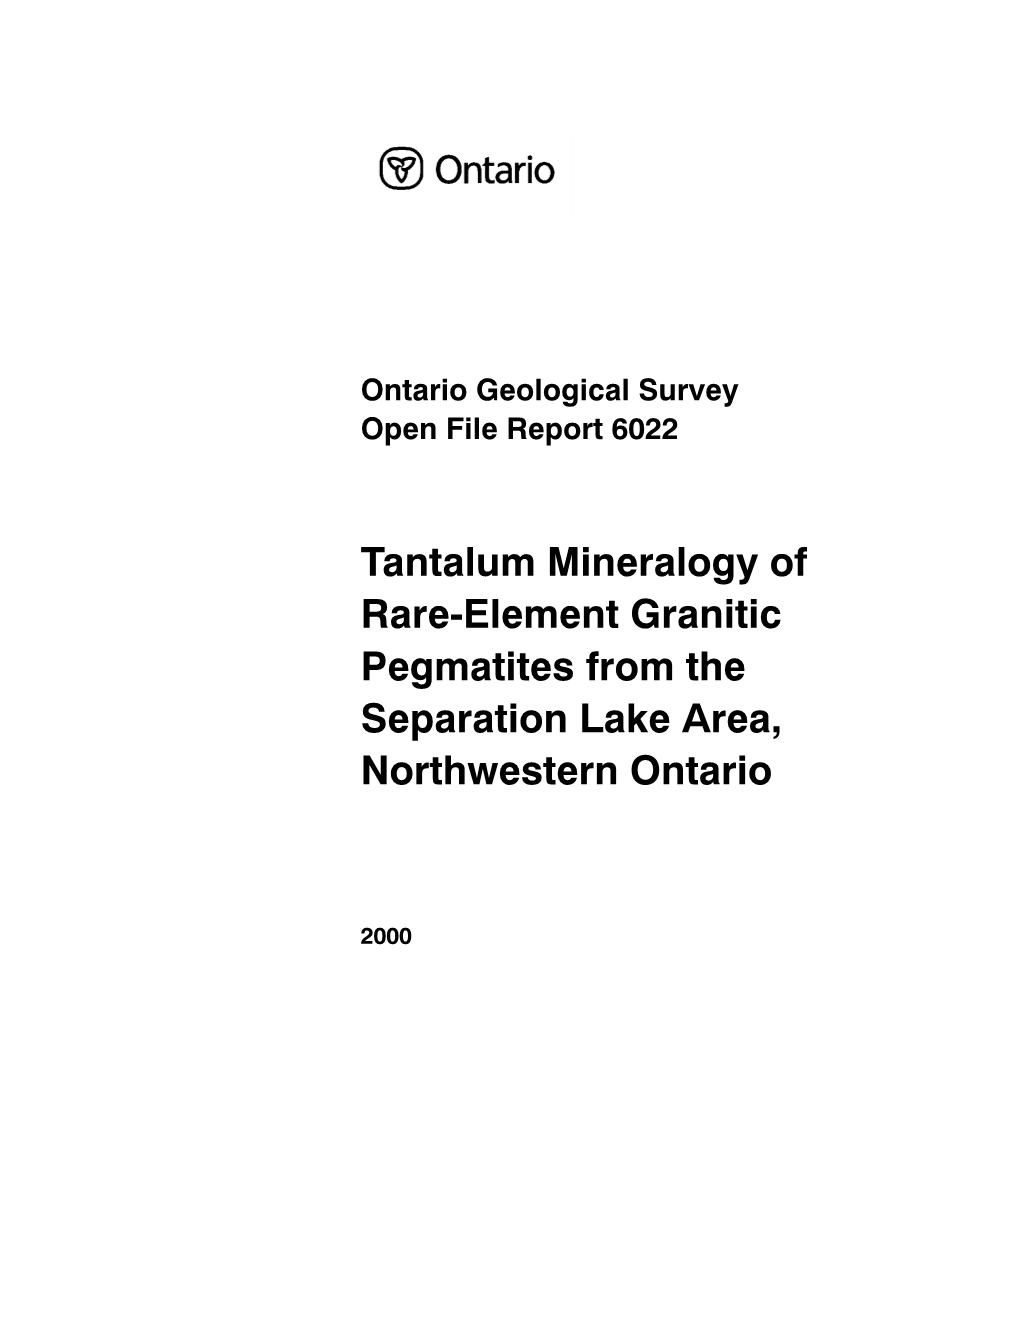 Tantalum Mineralogy, Rare-Element Granitic Pegmatites, Separation Lake